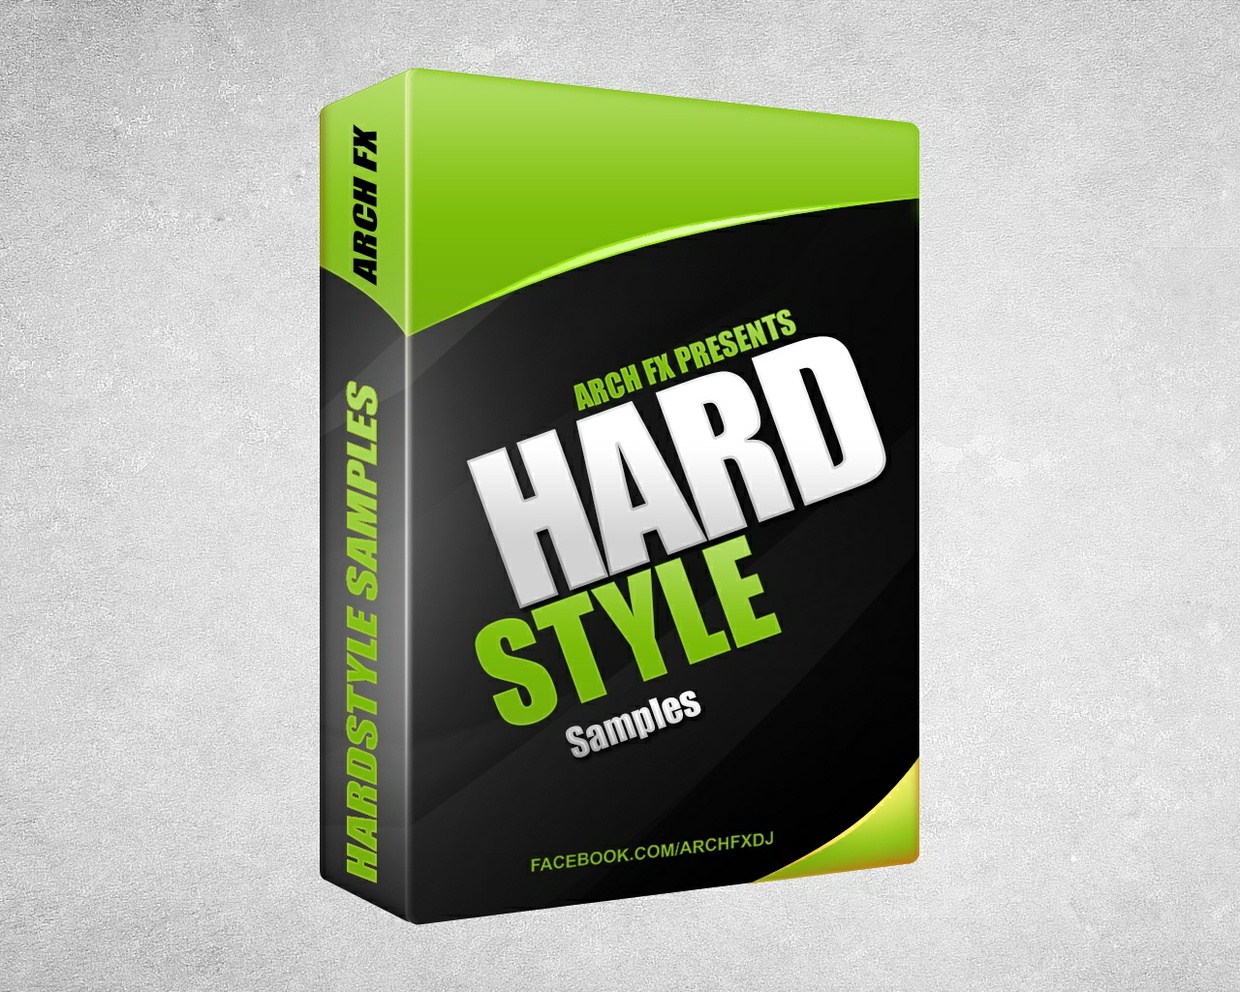 hardstyle sample pack free